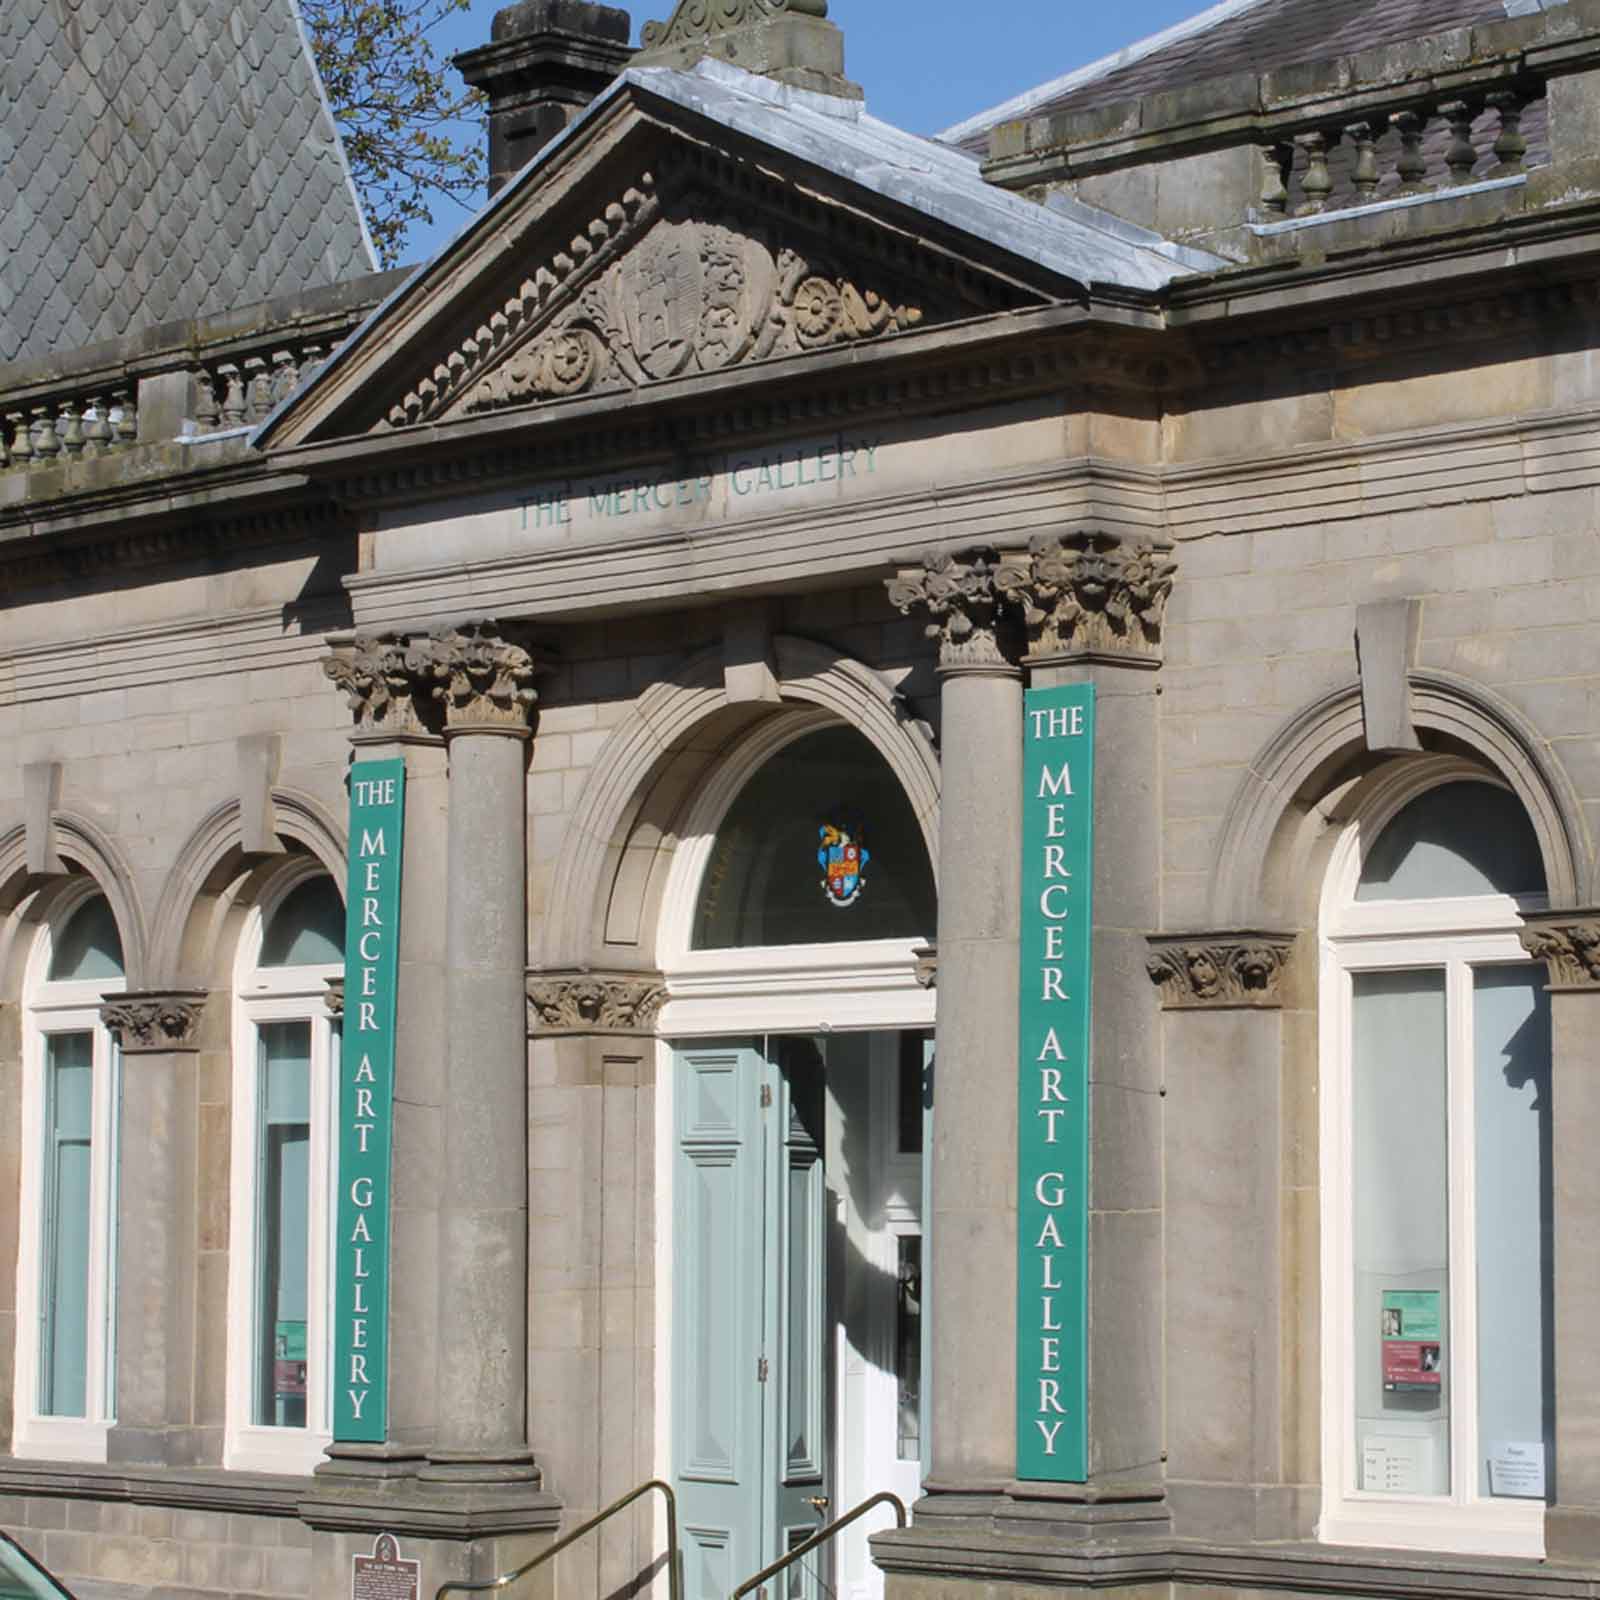 The Mercer Art Gallery in Harrogate